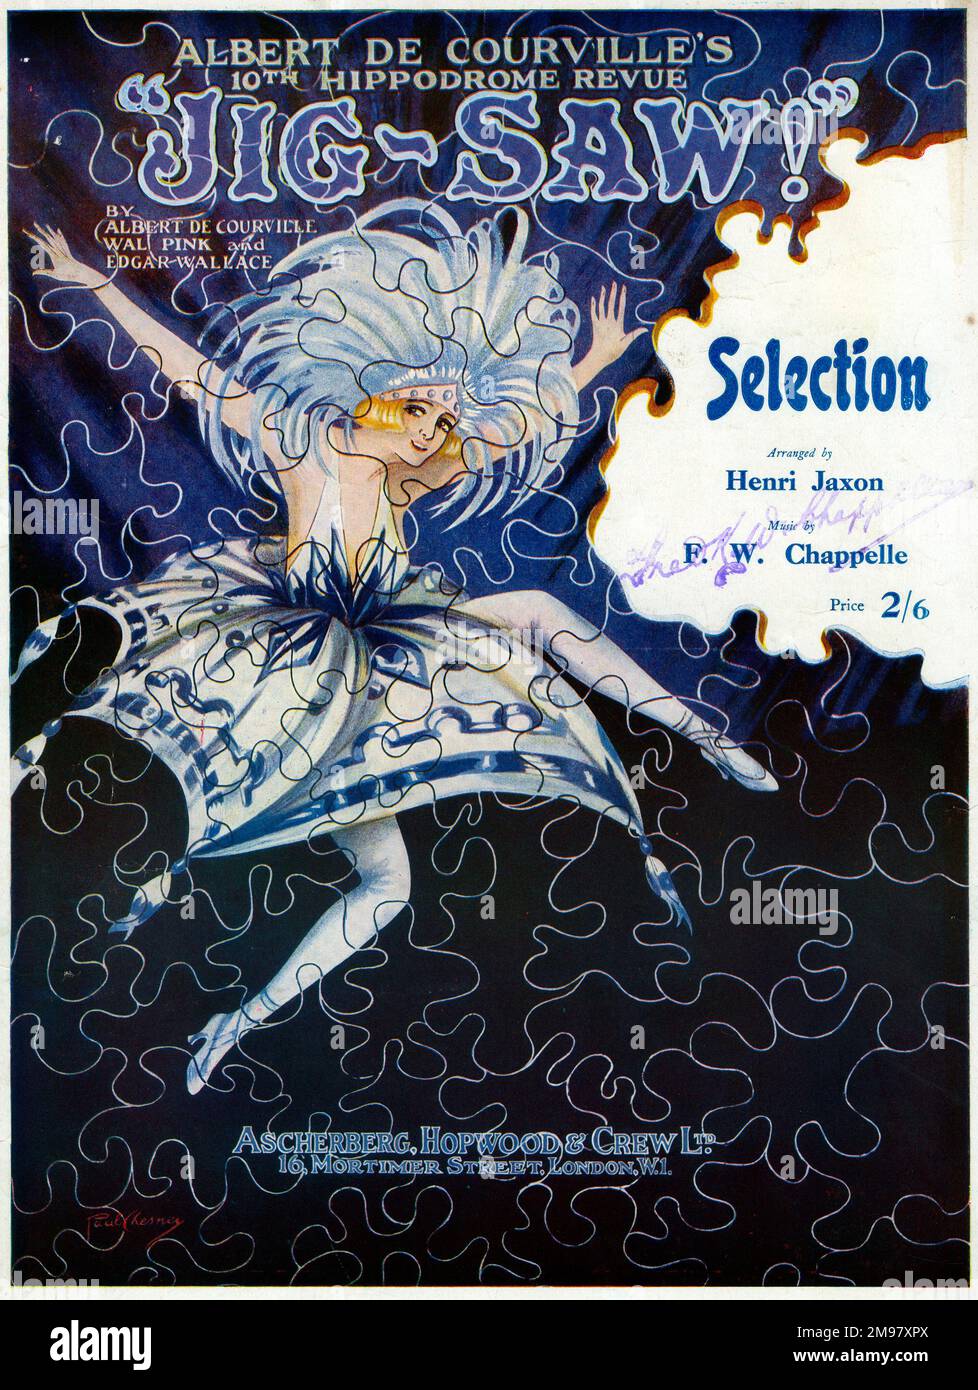 Music cover, Jig-Saw! Albert de Courville's 10th Hippodrome Revue,  Selection arranged by Henri Juxon, music by F W Chappelle Stock Photo -  Alamy